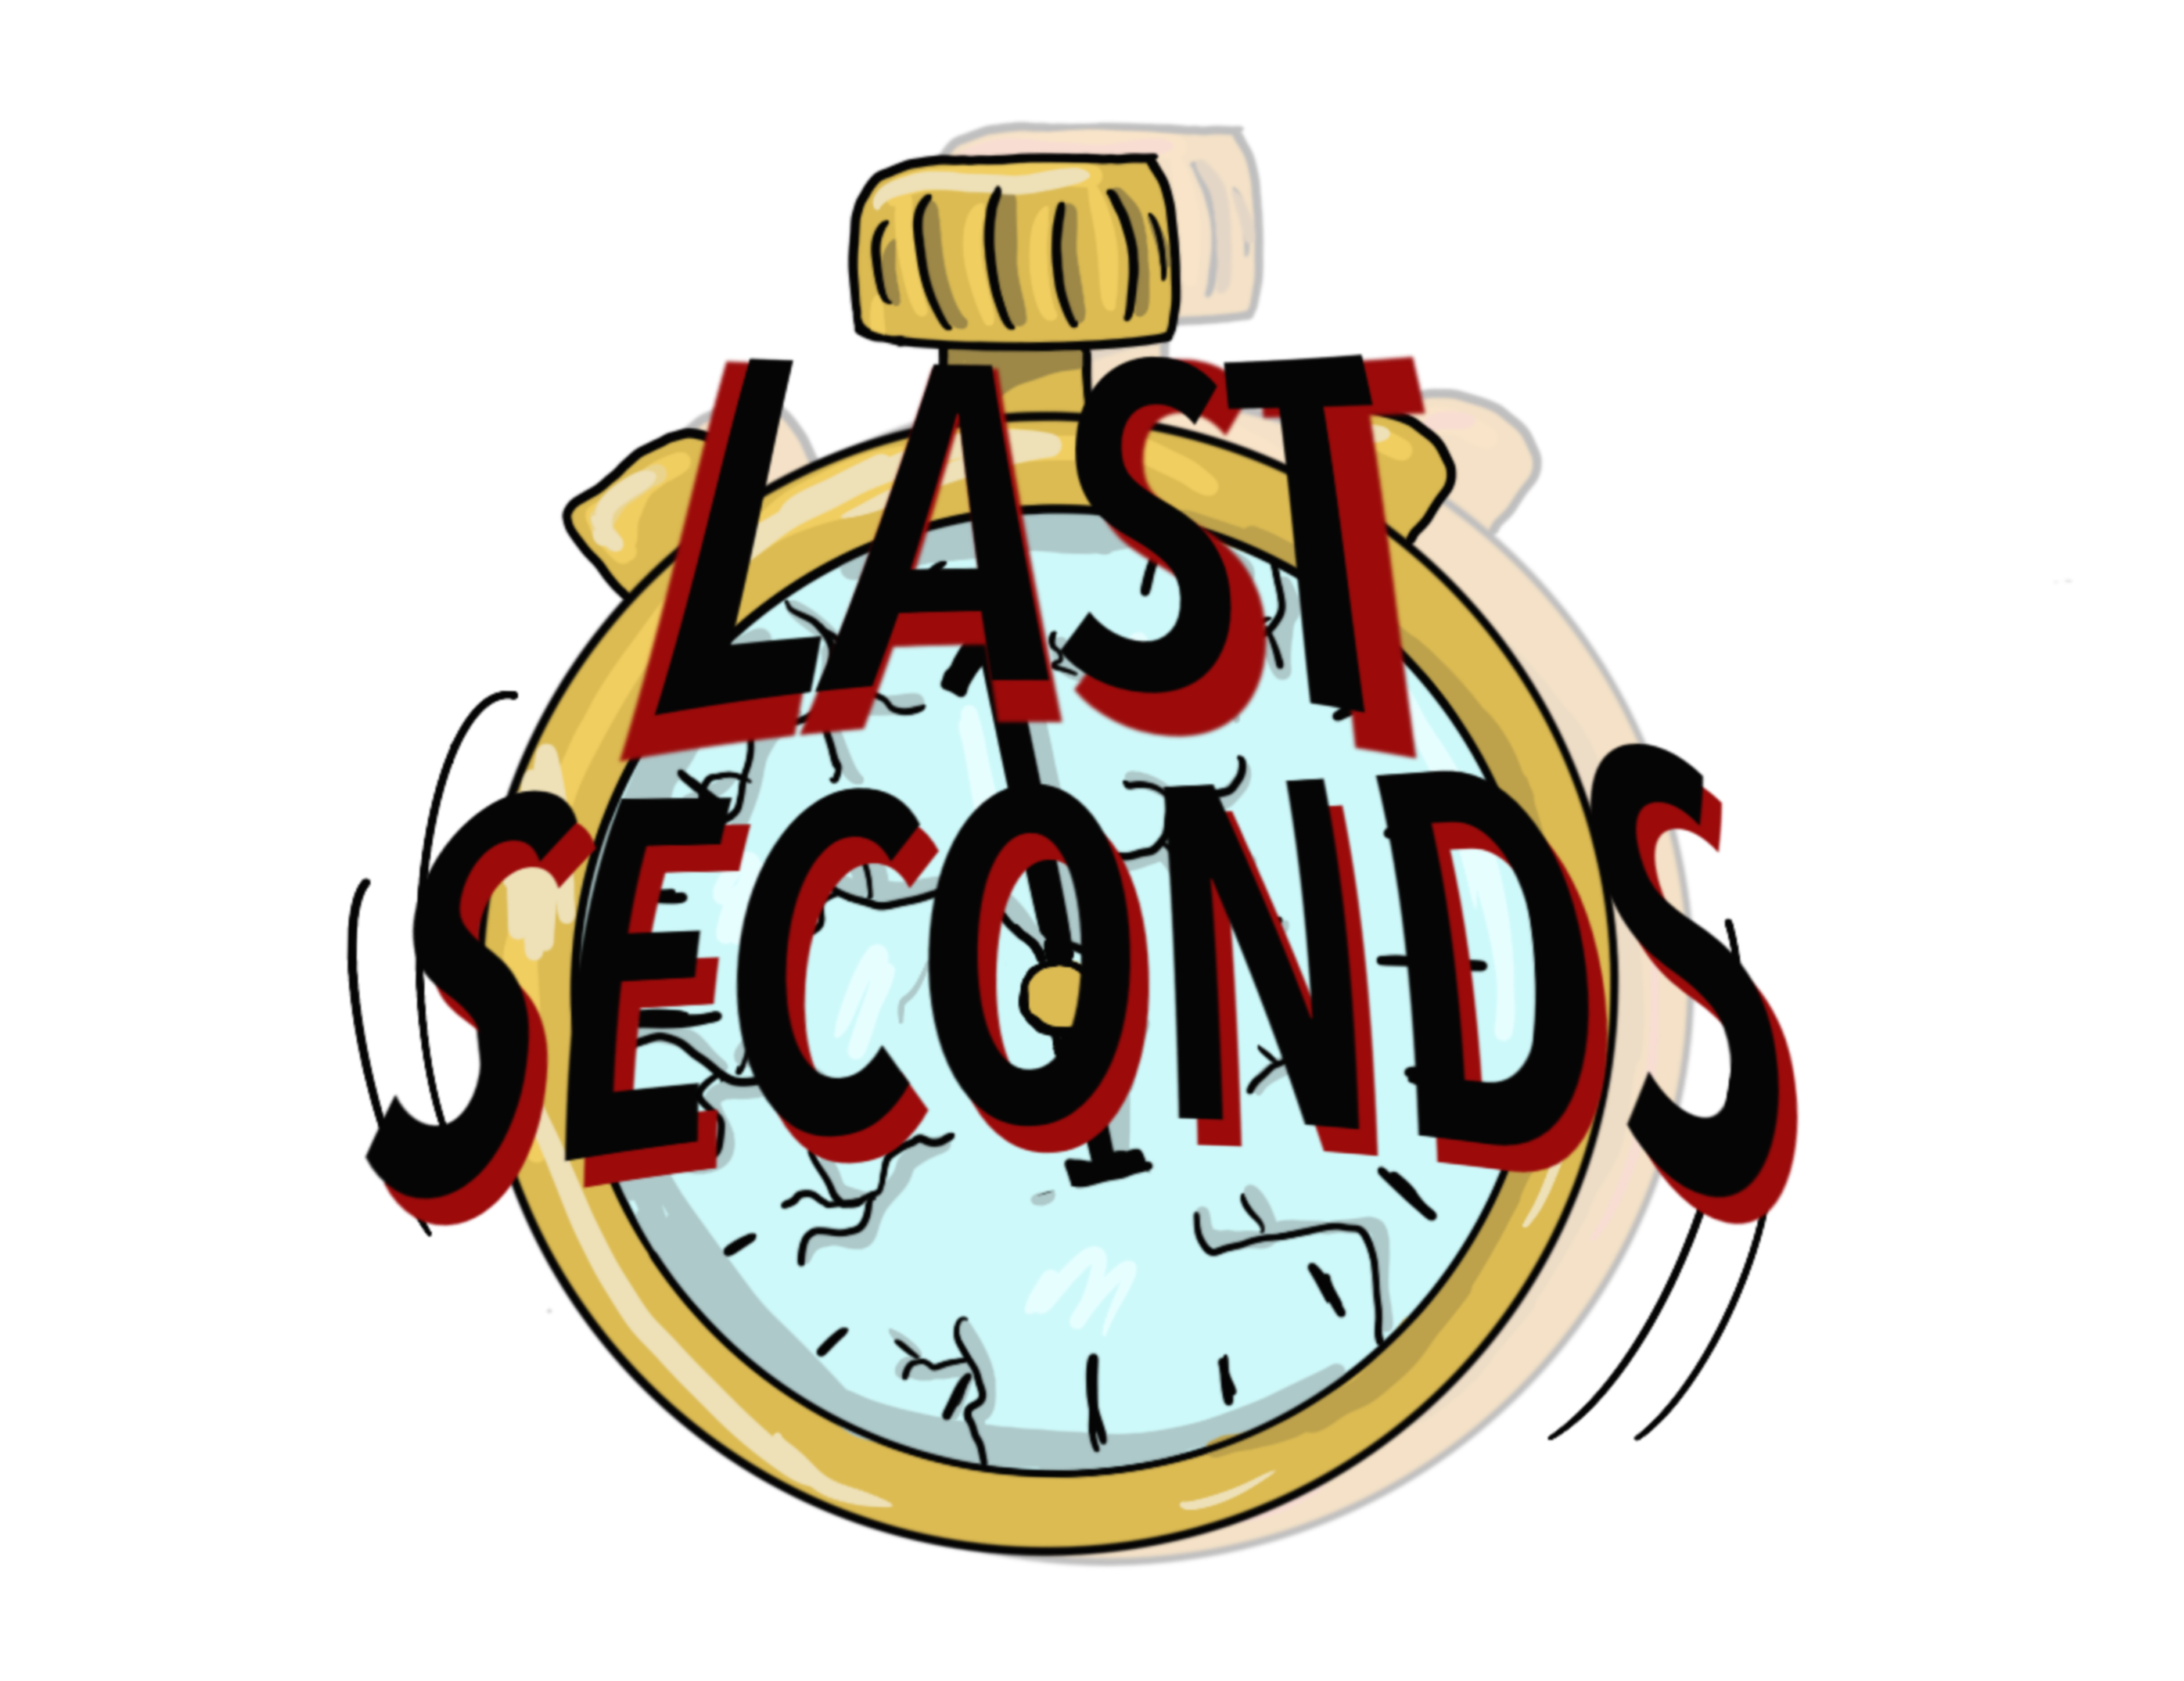 Last Seconds